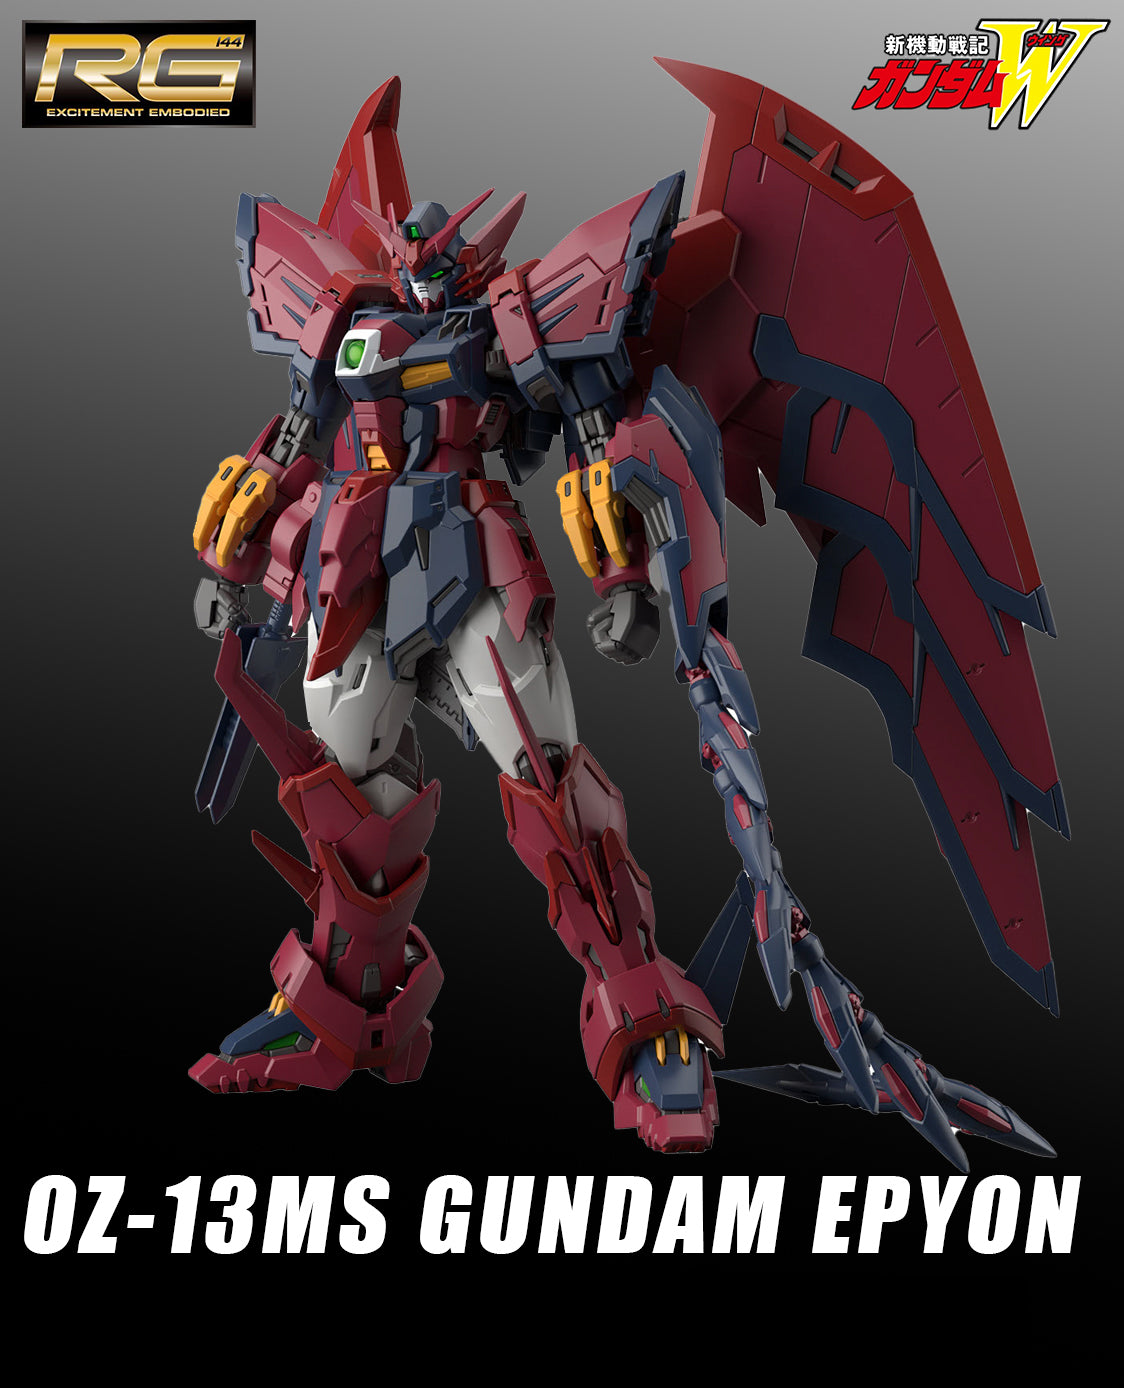 Contact & Location – USA Gundam Store